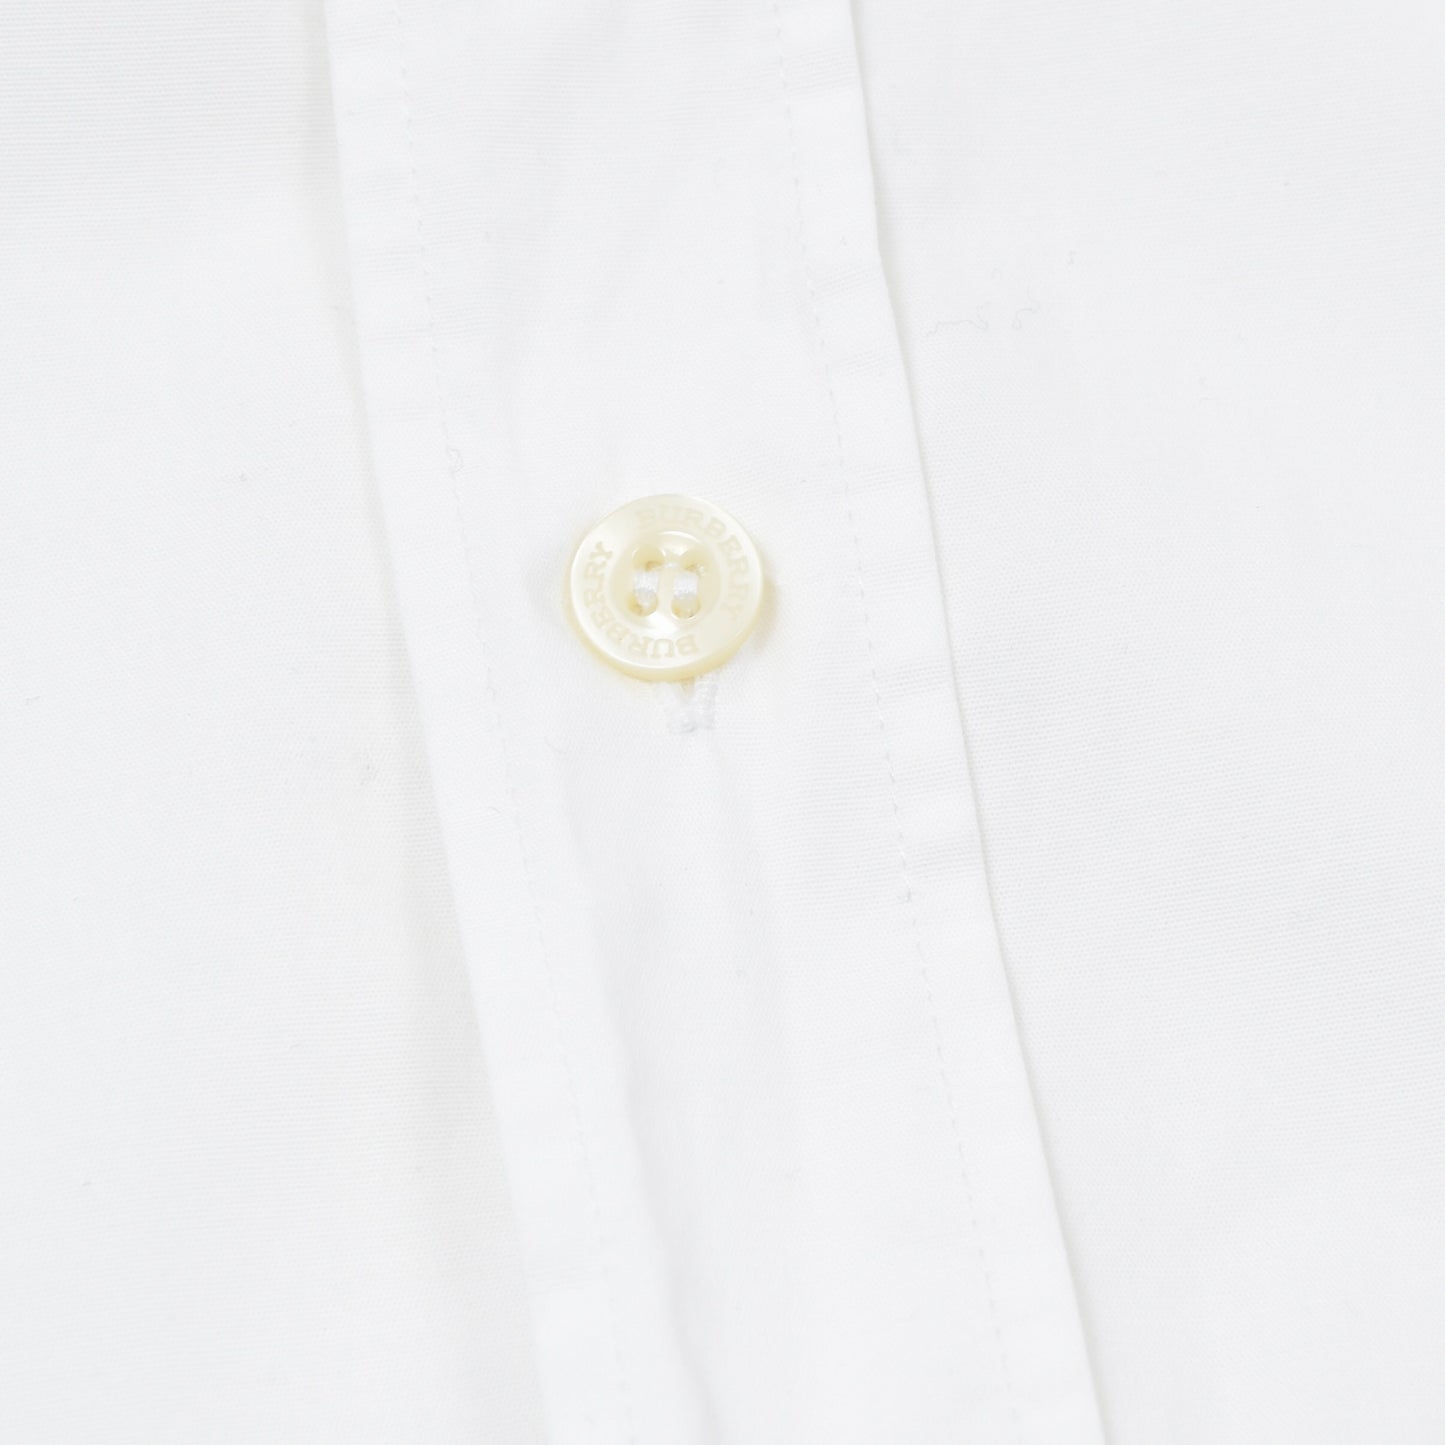 Burberry Brit Stretch Shirt Size XL - White